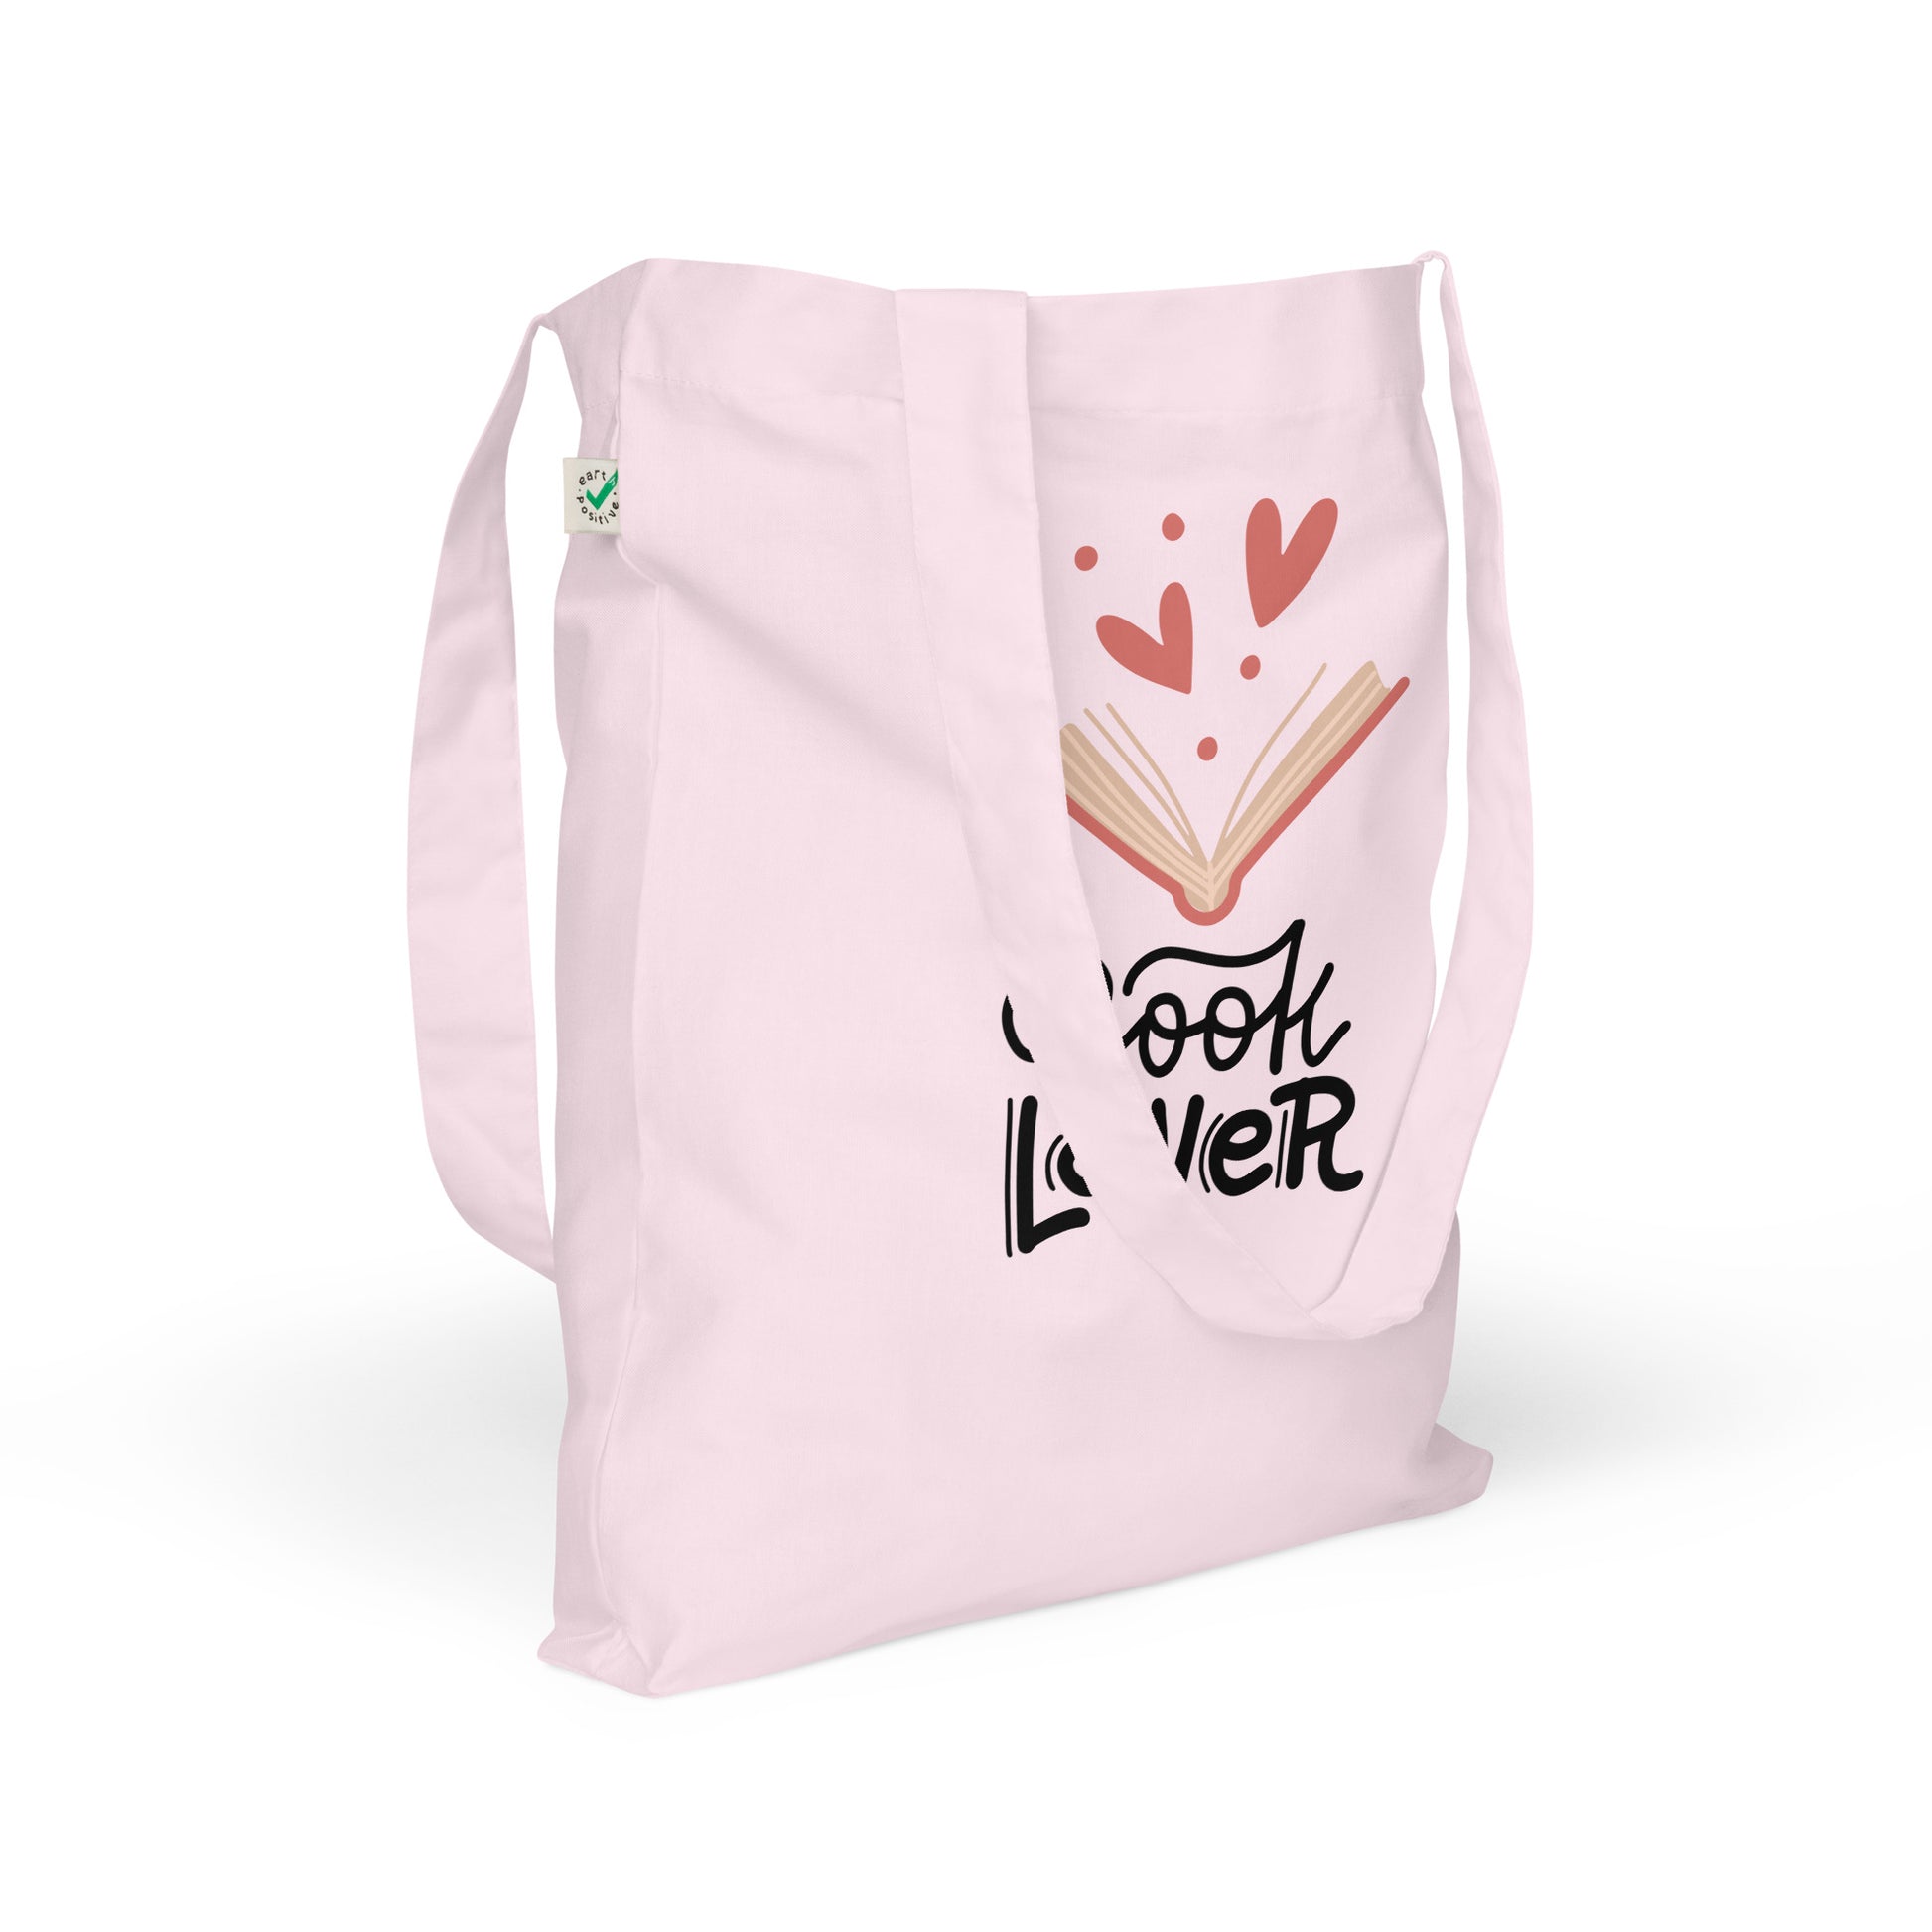 Book Lover - Organic fashion tote bag - HobbyMeFree